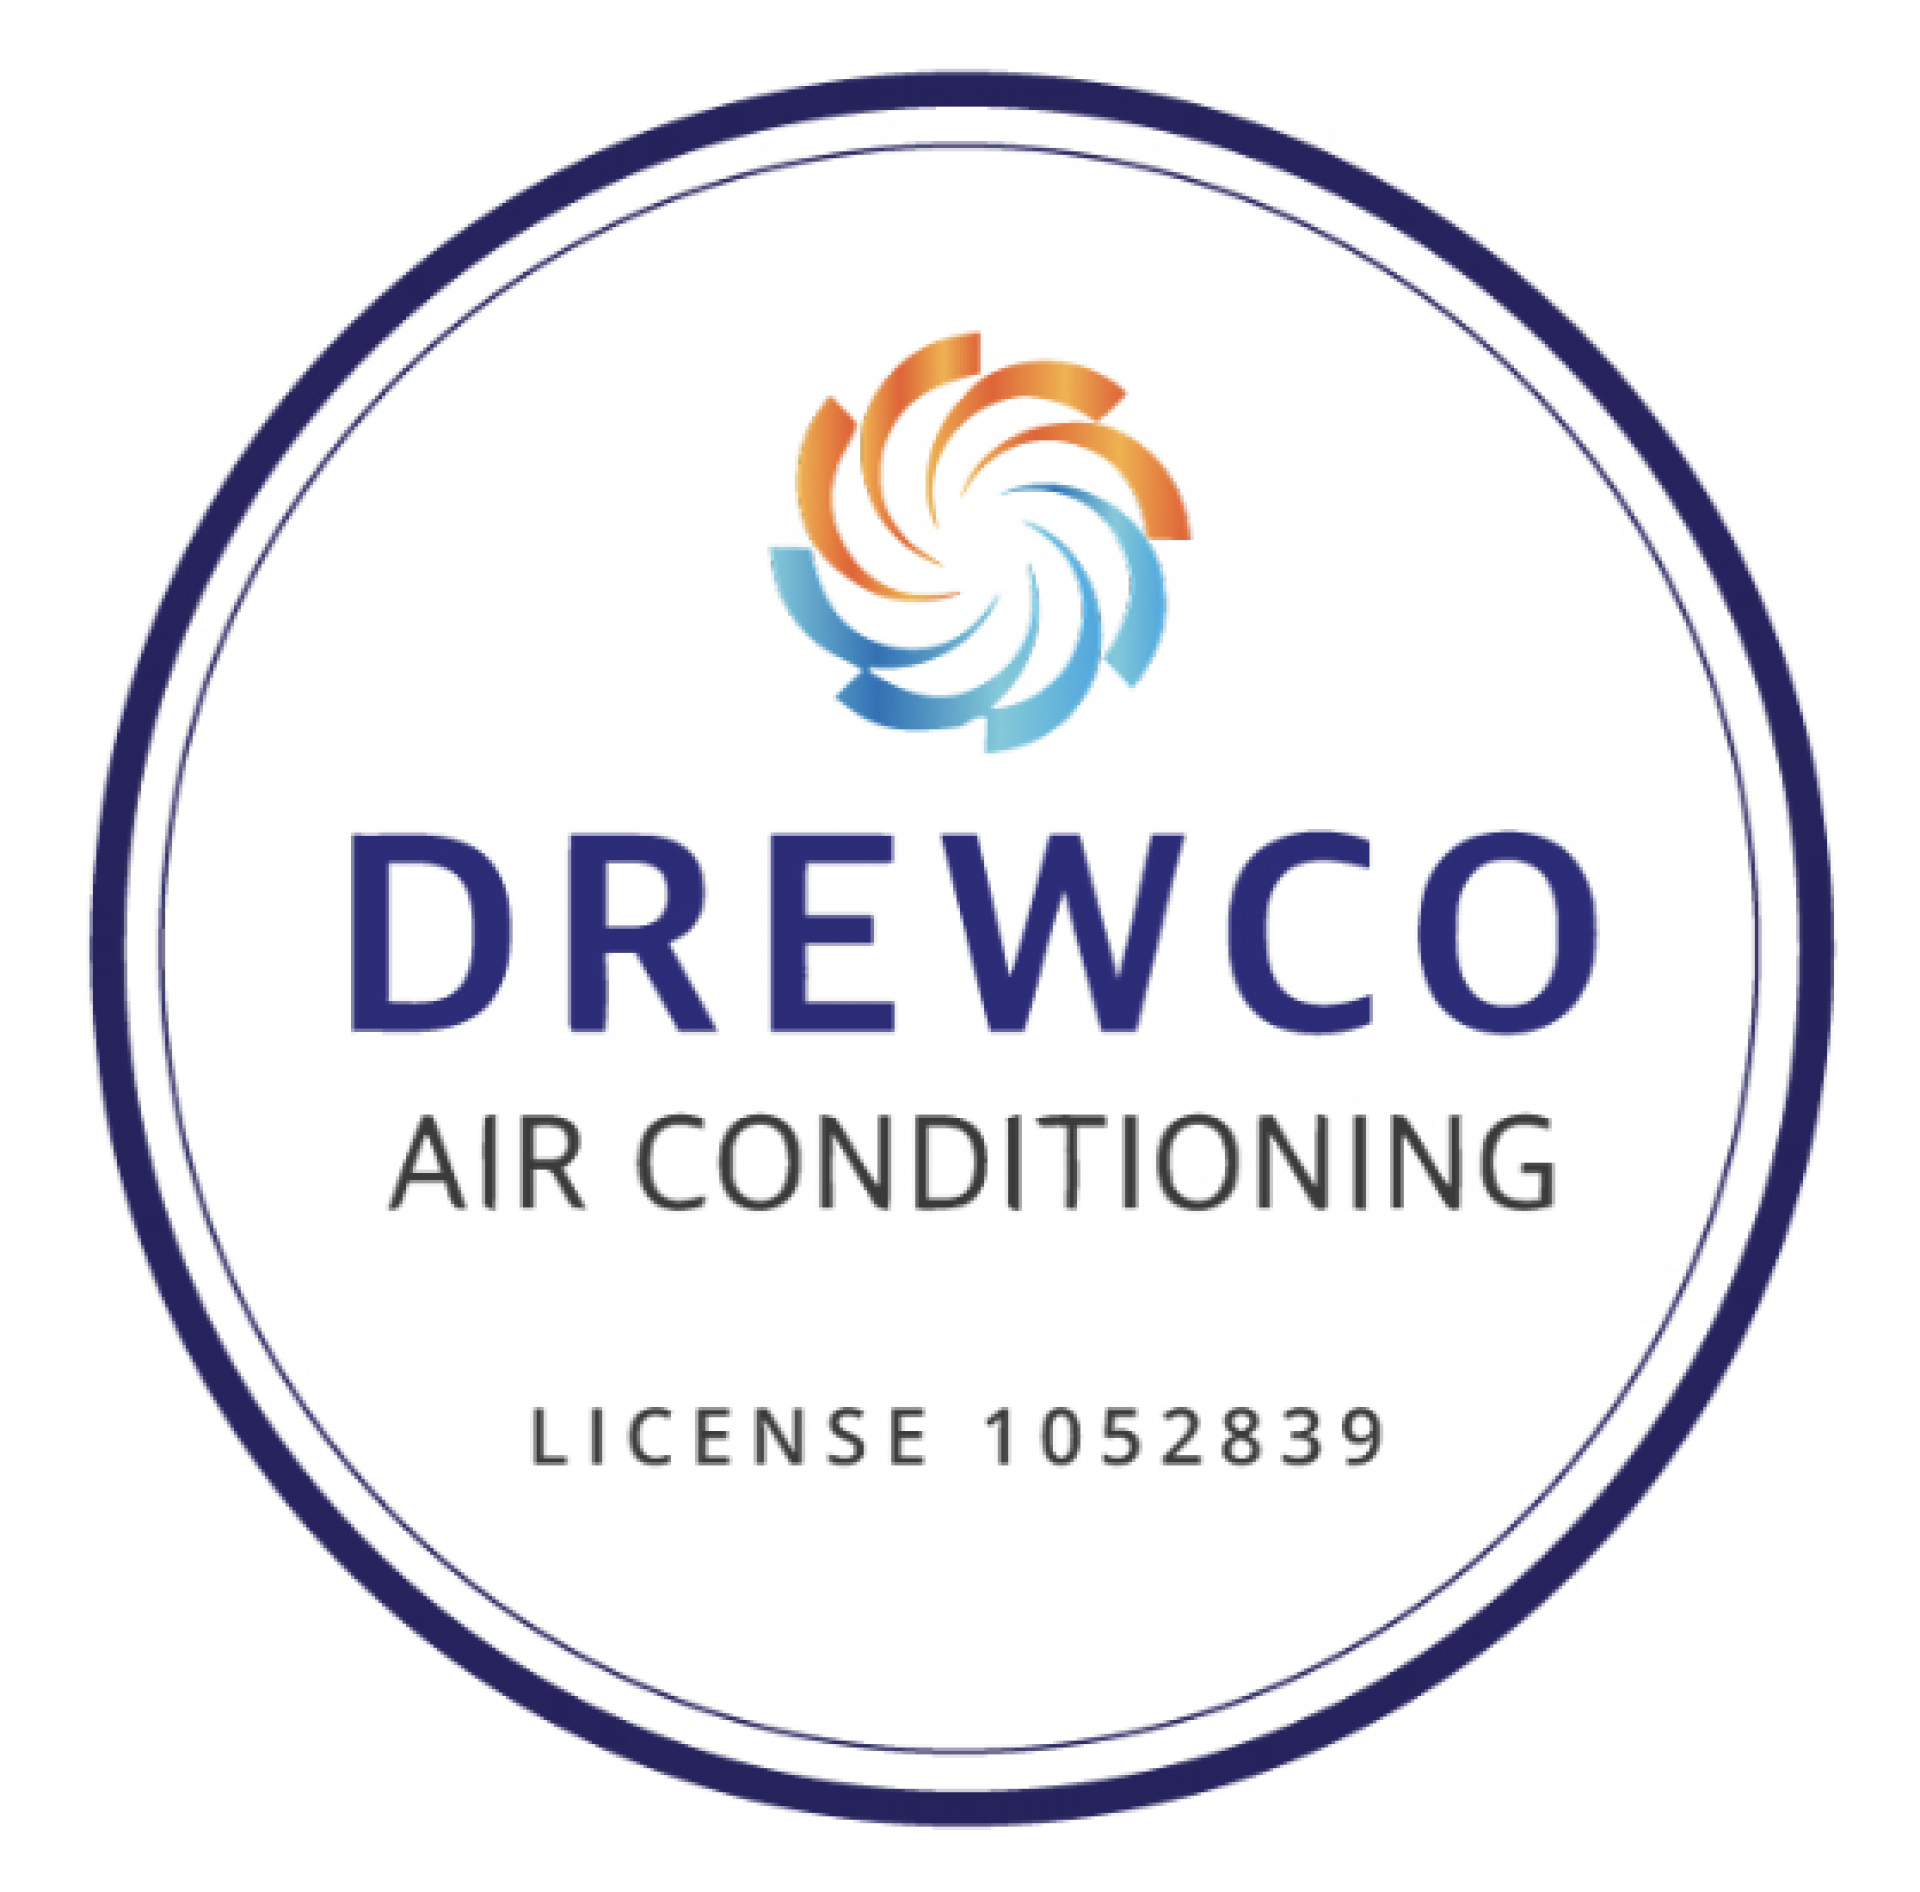 Drewco Air Conditioning company logo